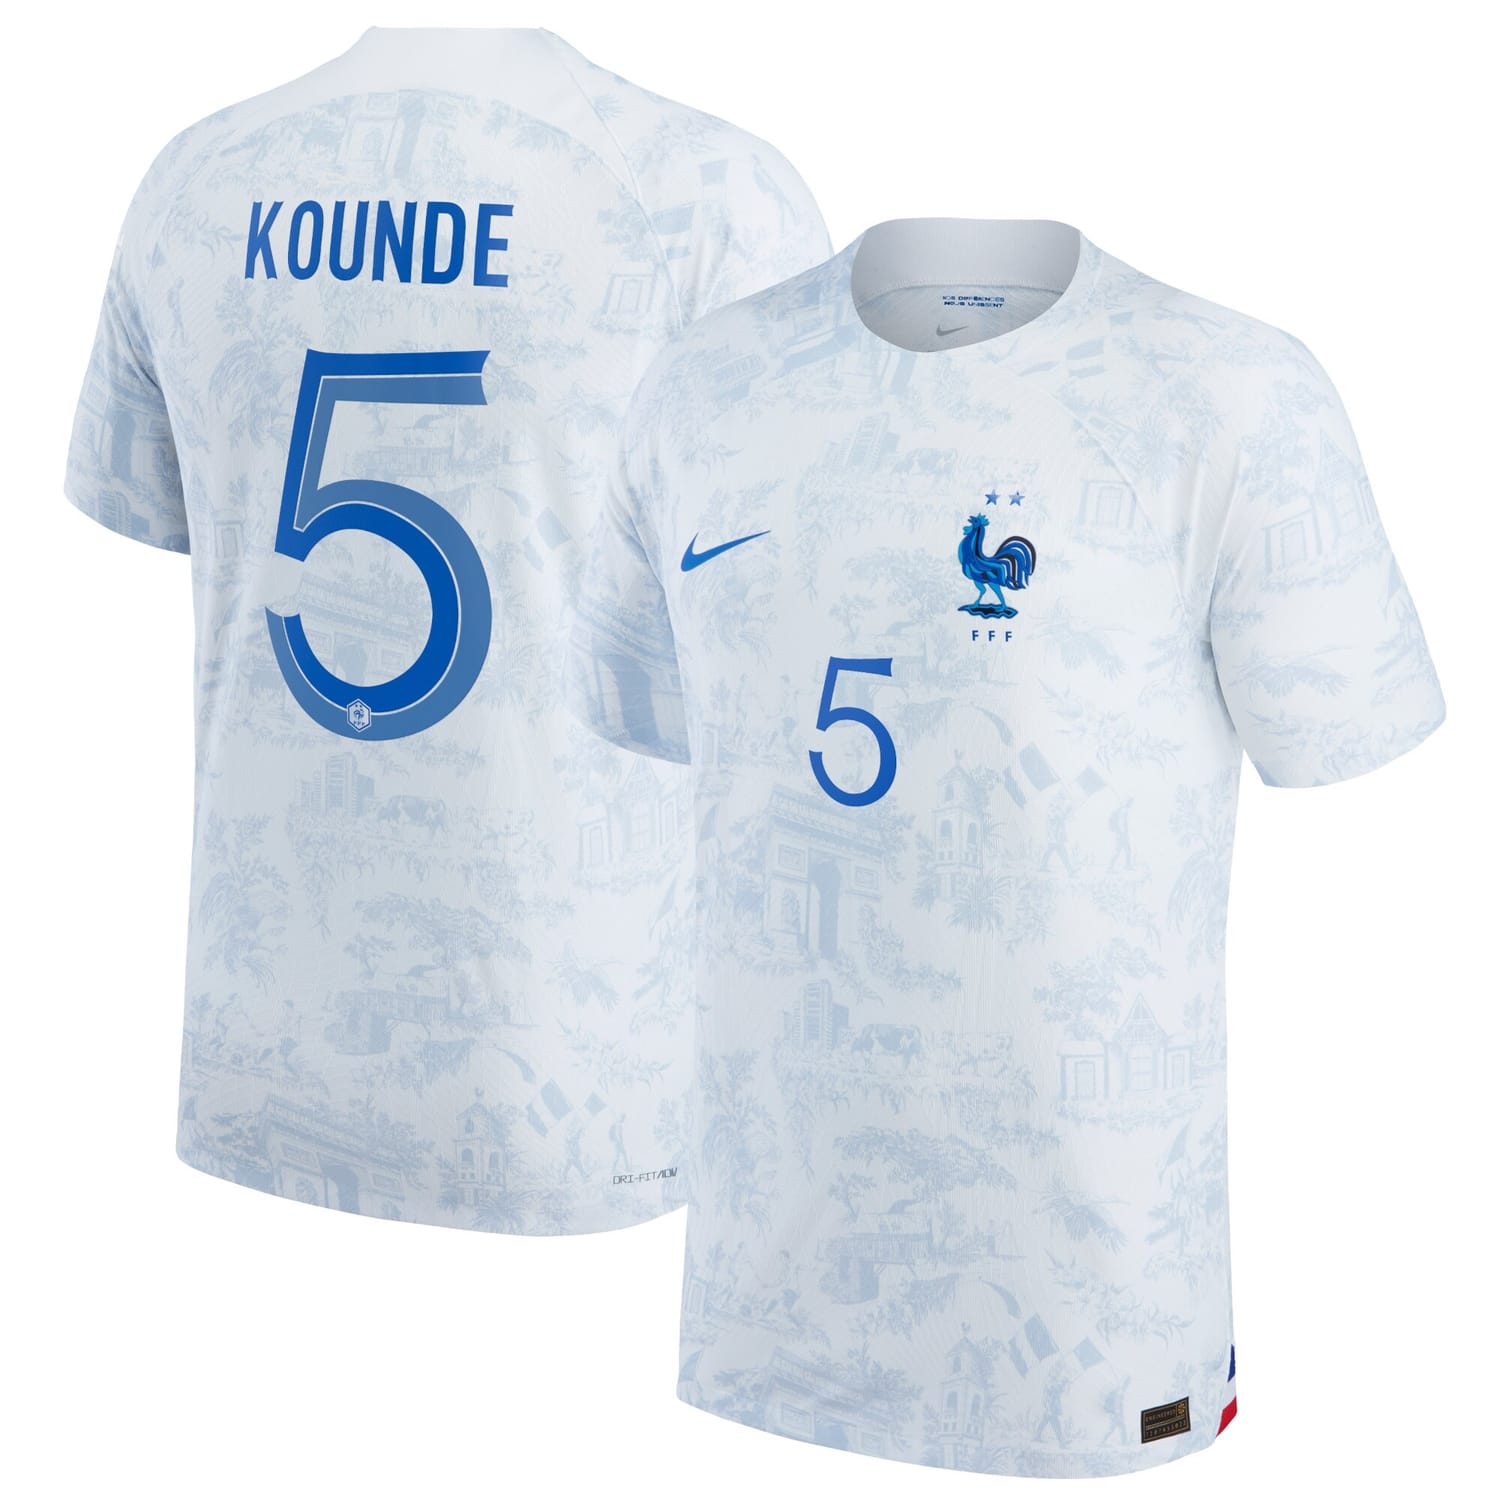 France National Team Away Authentic Jersey Shirt 2022 player Jules Koundé printing for Men